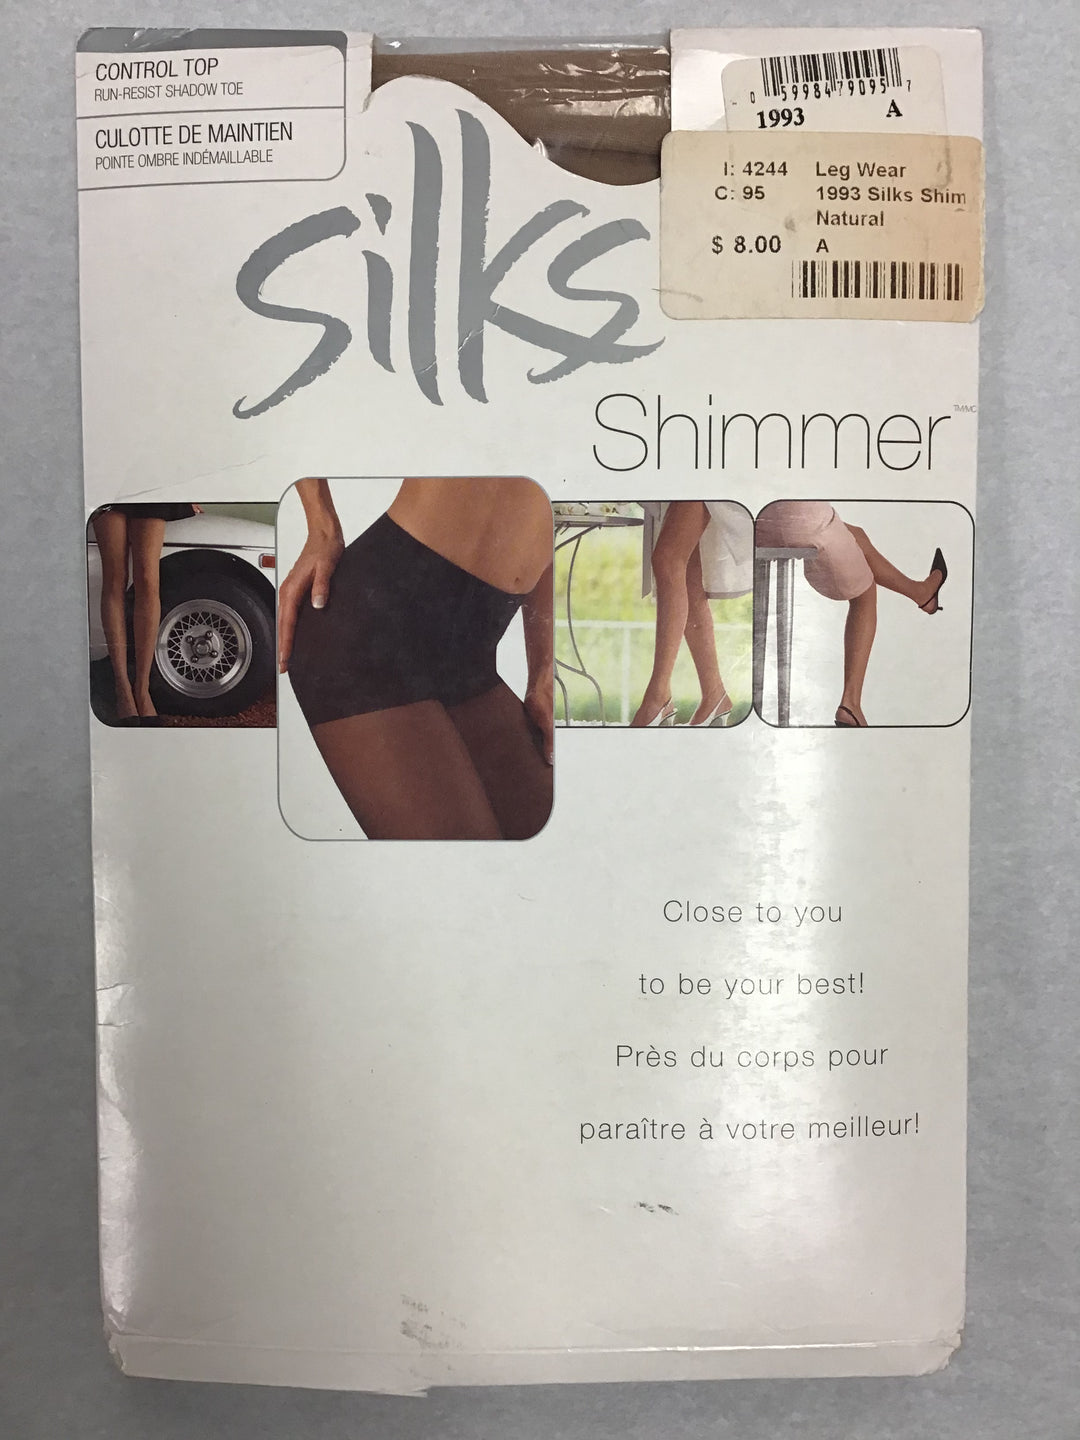 Silks Fashion Mode Control Top Pantyhose Natural Brown A Fishnet New b28